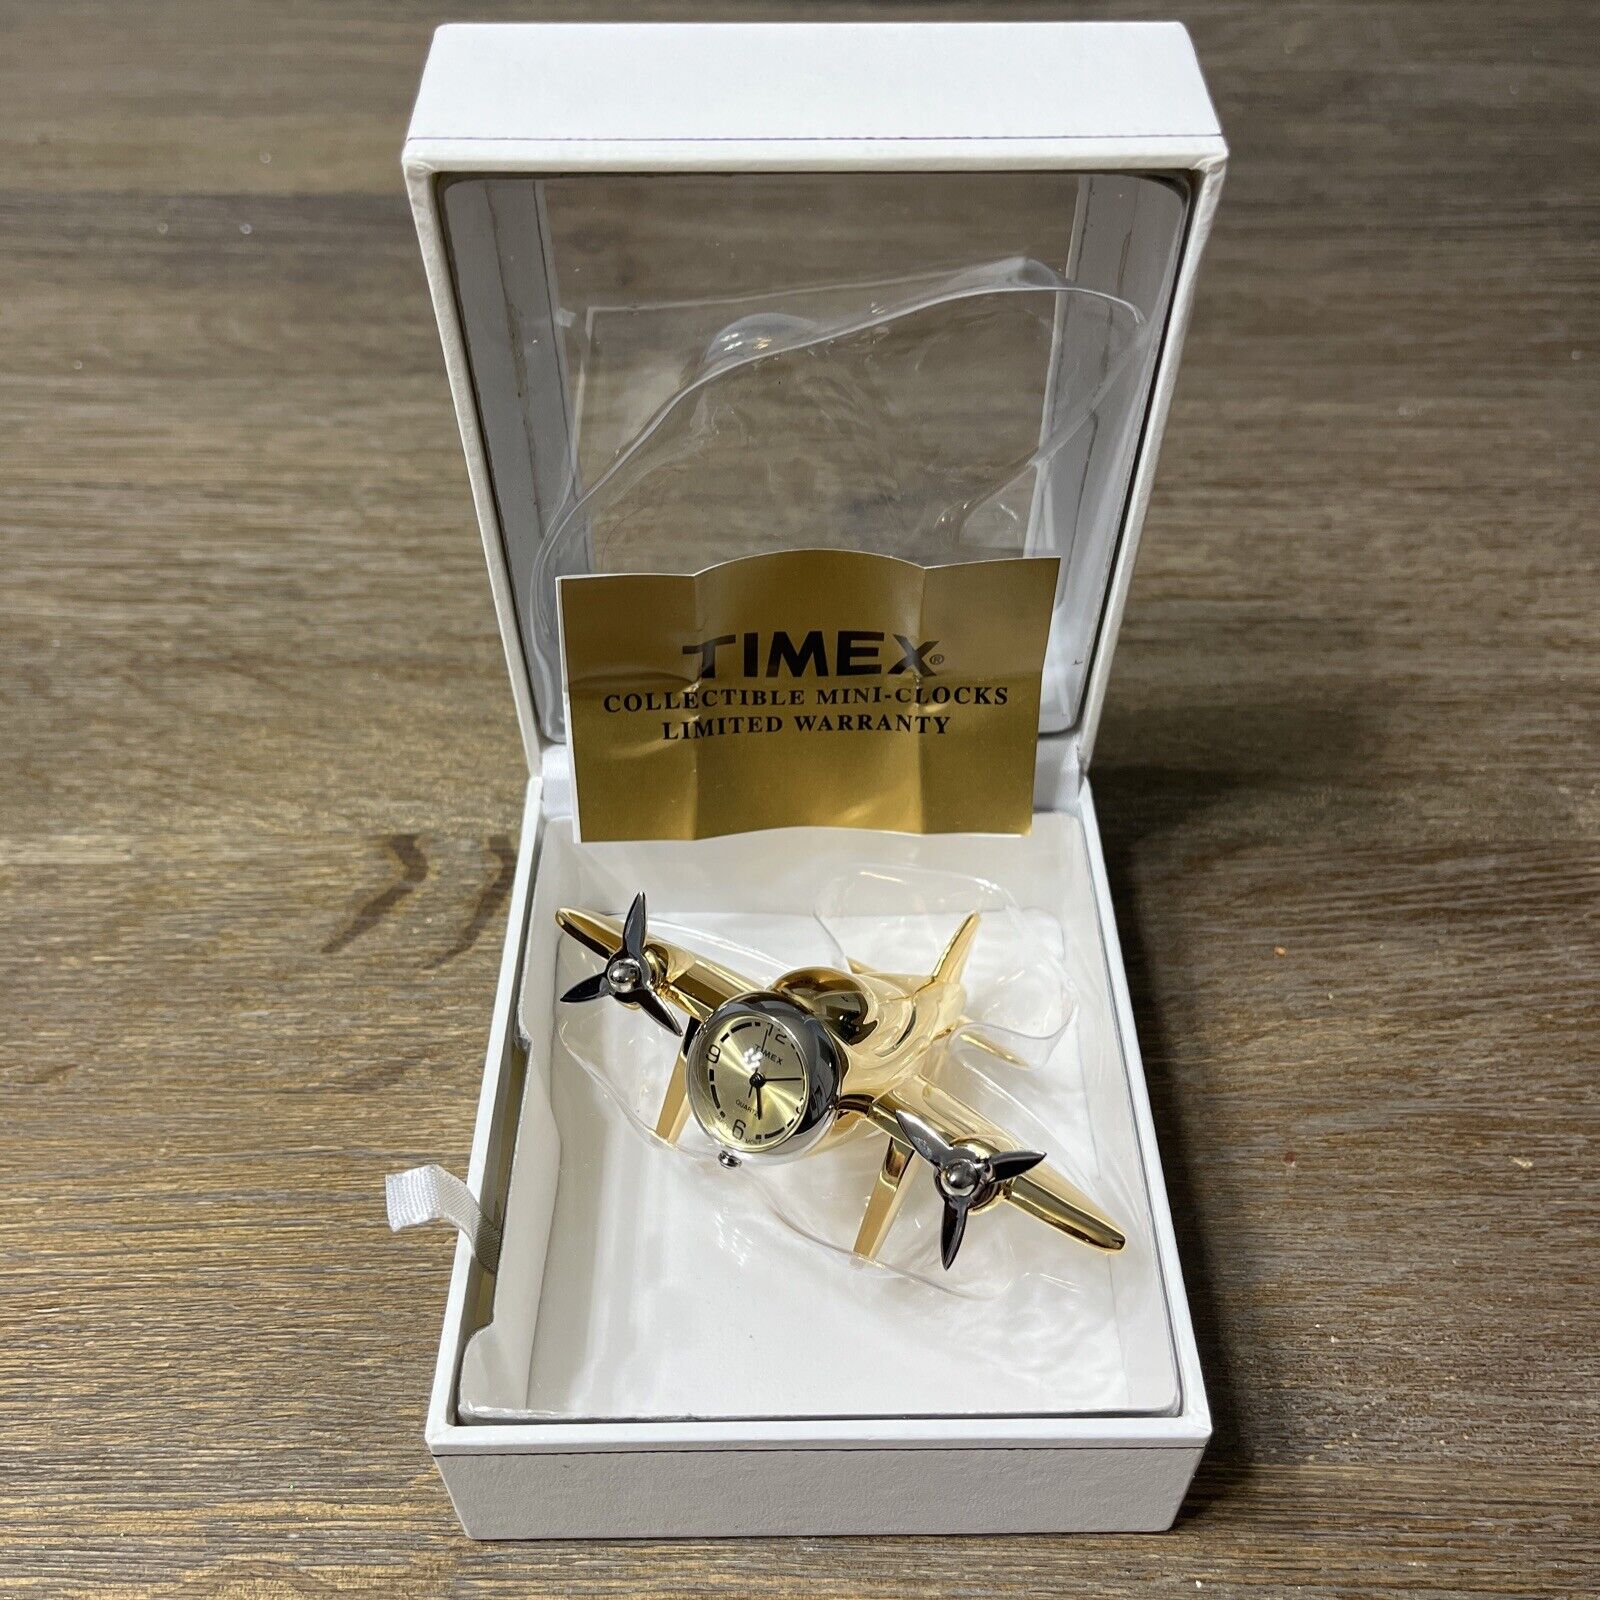 Timex Collectible Mini Clock Airplane